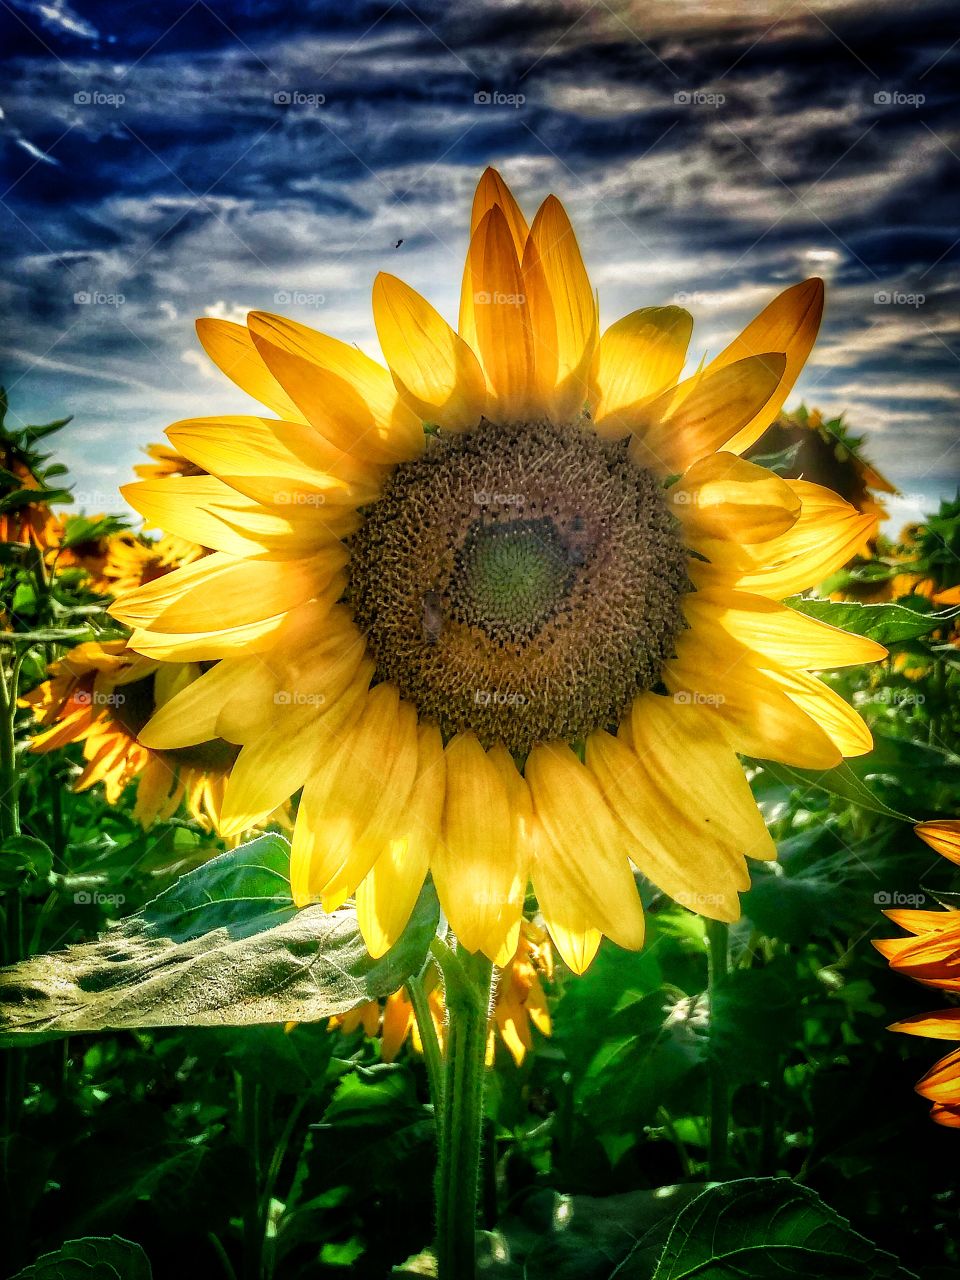 Sunshine on the sunflowers 🌻